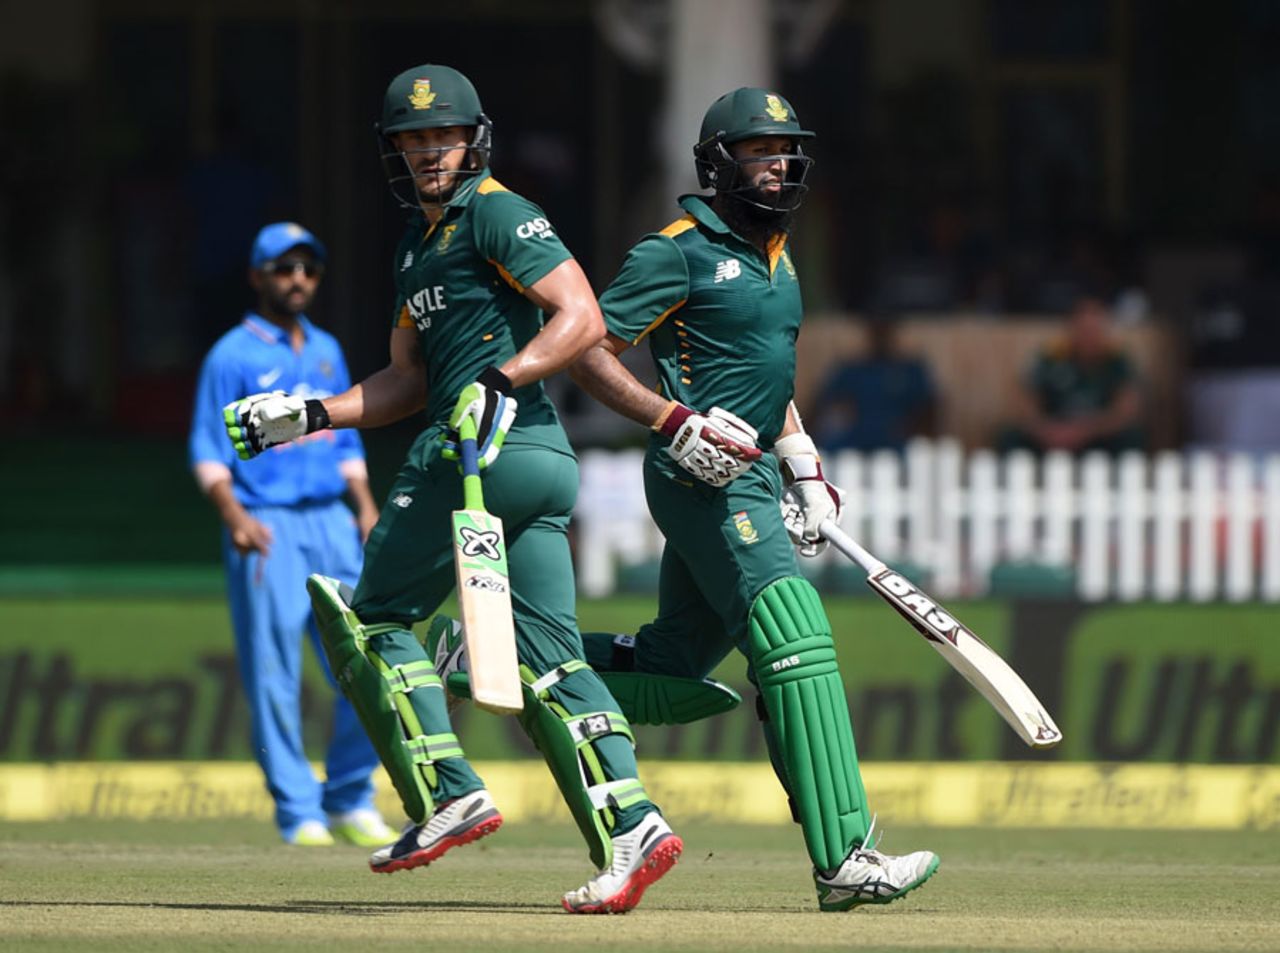 Faf du Plessis and Hashim Amla added 59 together, India v South Africa, 1st ODI, Kanpur, October 11, 2015